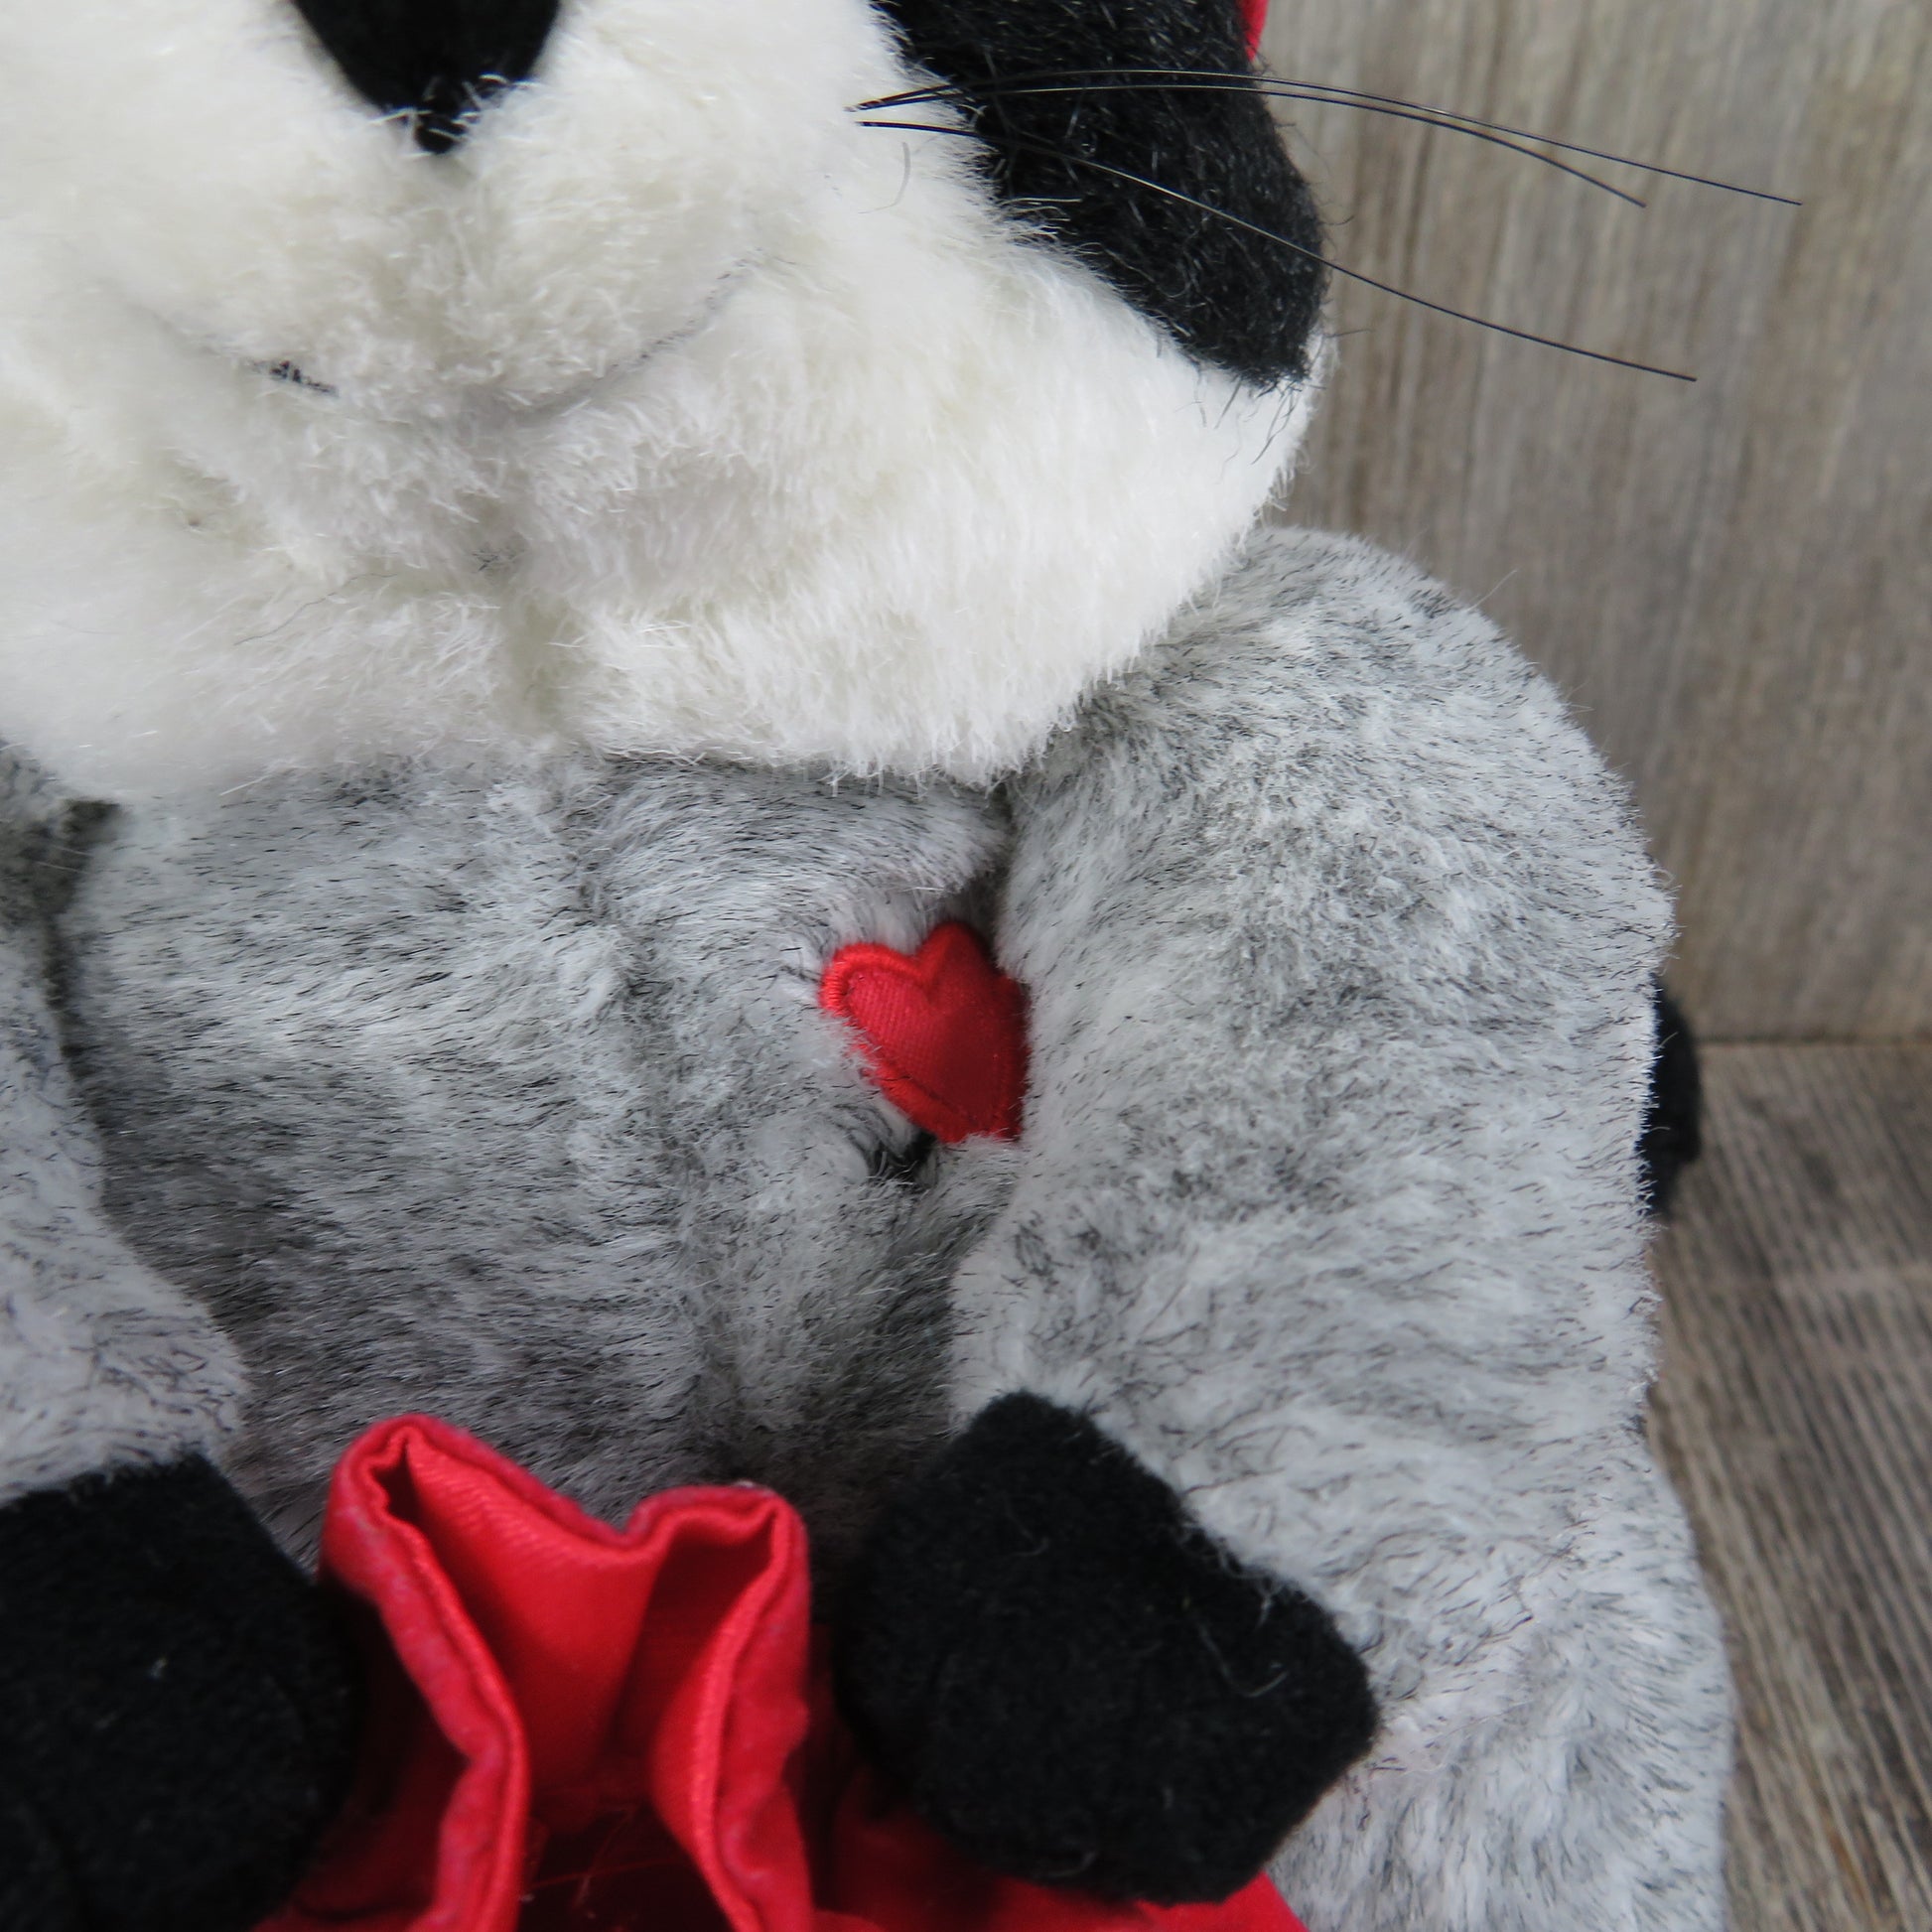 Raccoon in Red Mask Plush Love Bandit Hallmark Bag Valentines Stuffed Animal Gray - At Grandma's Table